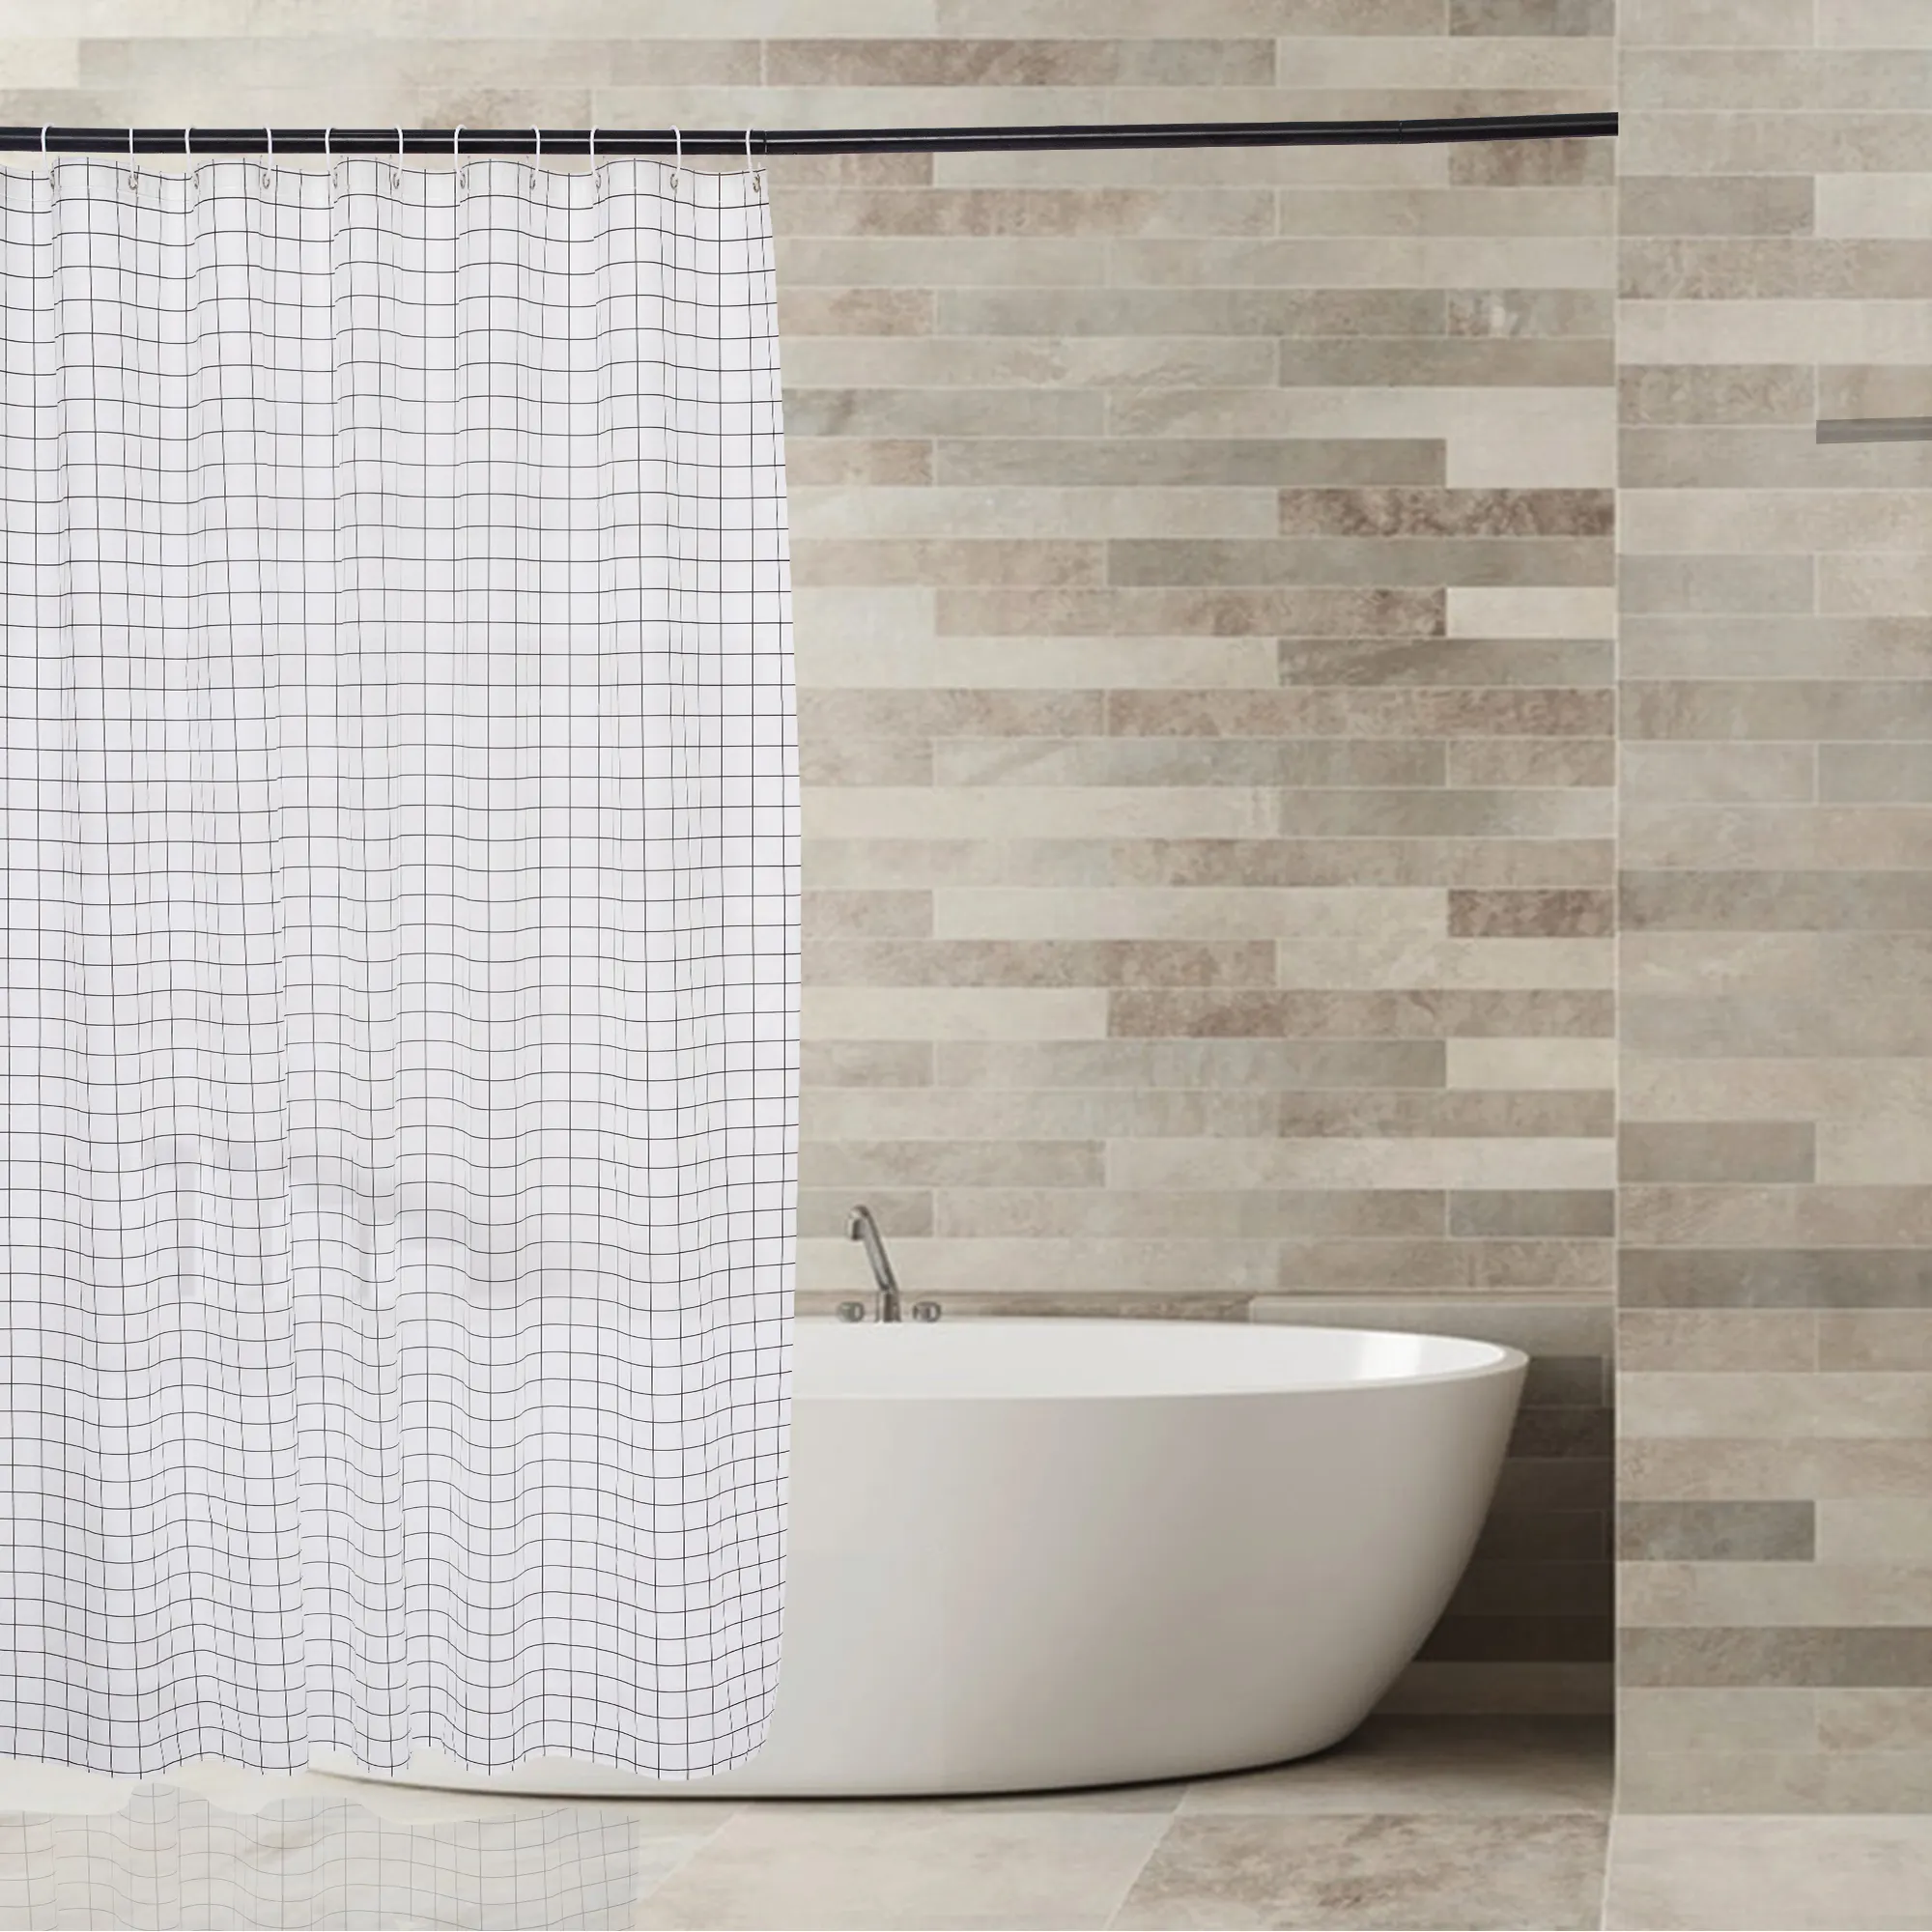 RTS 미국 창고 모던 스타일 흑백 격자 무늬 고급 두꺼운 방수 및 곰팡이 방지 목욕 샤워 커튼 PEVA 소재